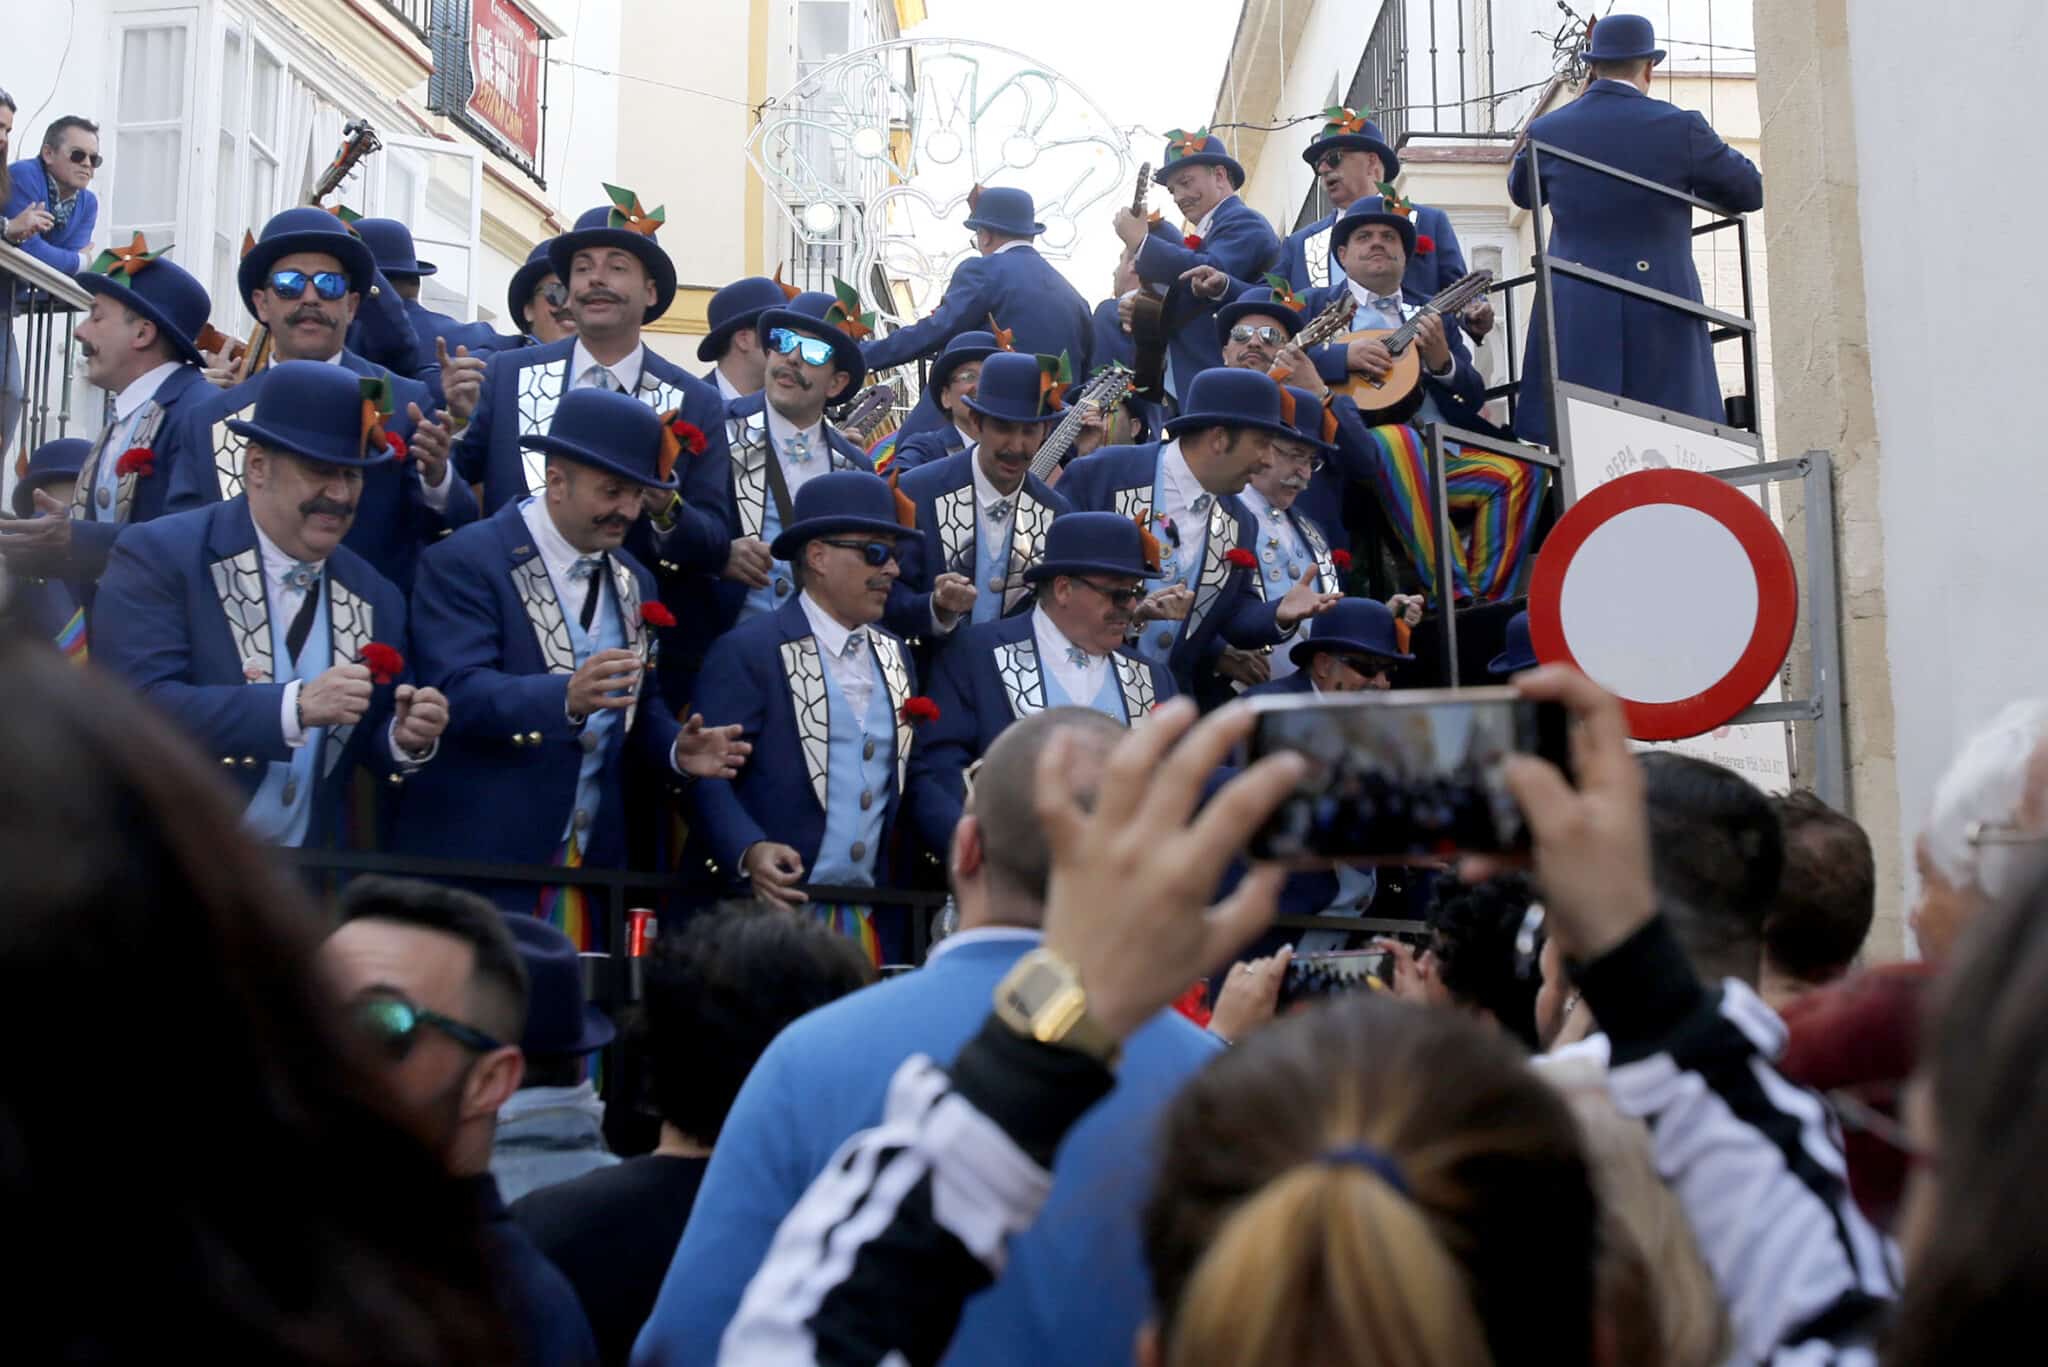 Carrusel de coros Carnaval de Cádiz 2019.